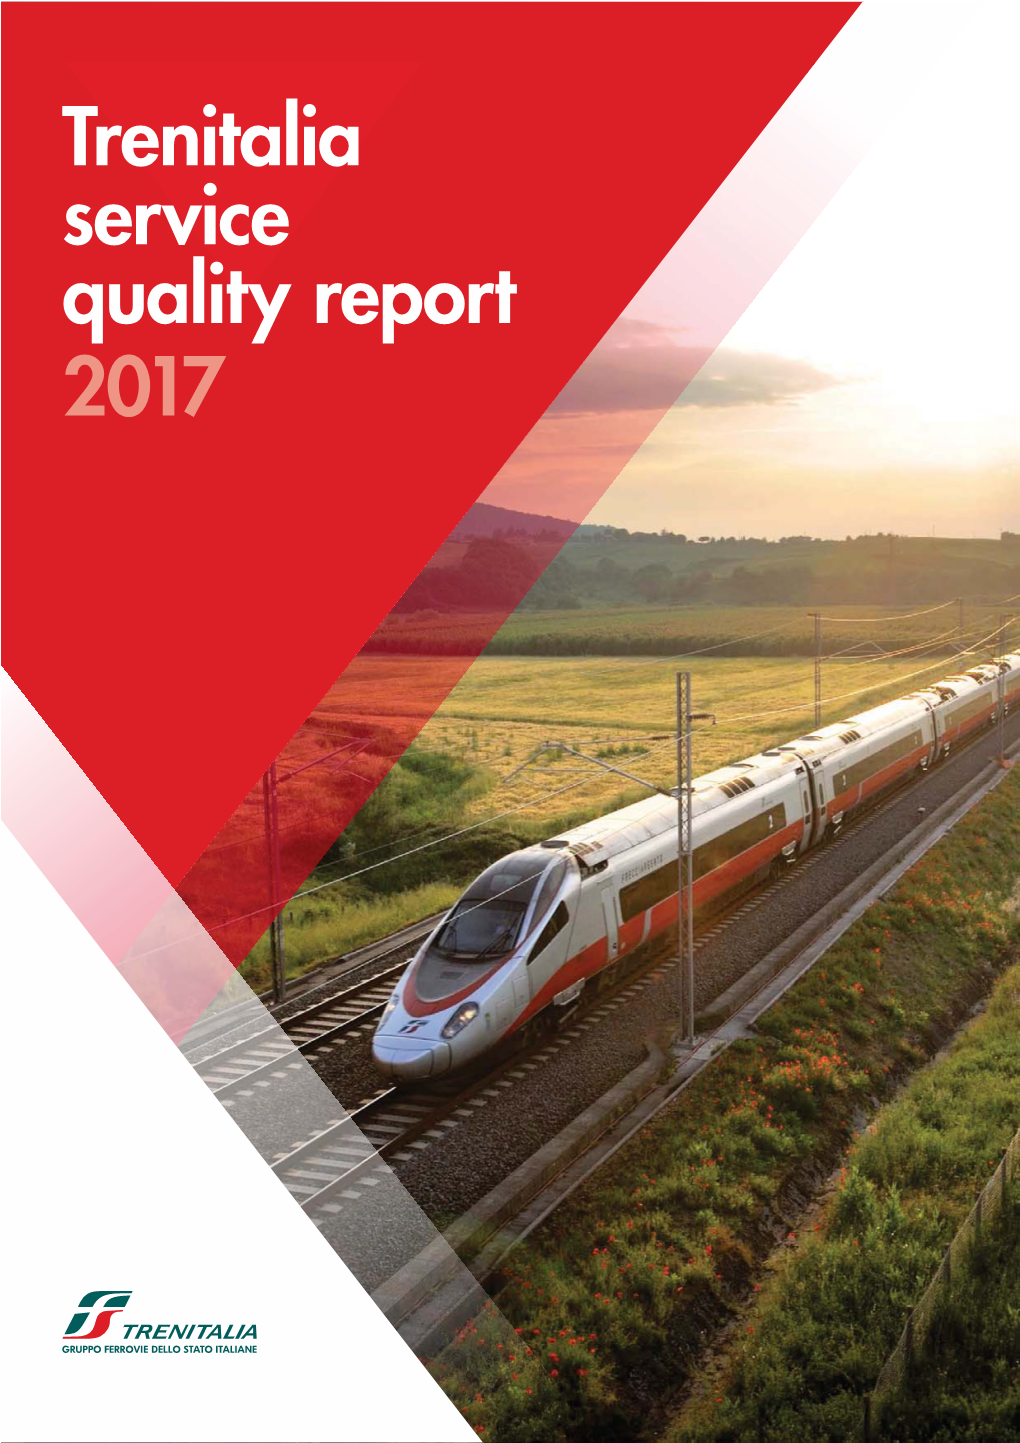 TRENITALIA SERVICE QUALITY REPORT 2017 > I Trenitalia Service Quality Report 2017